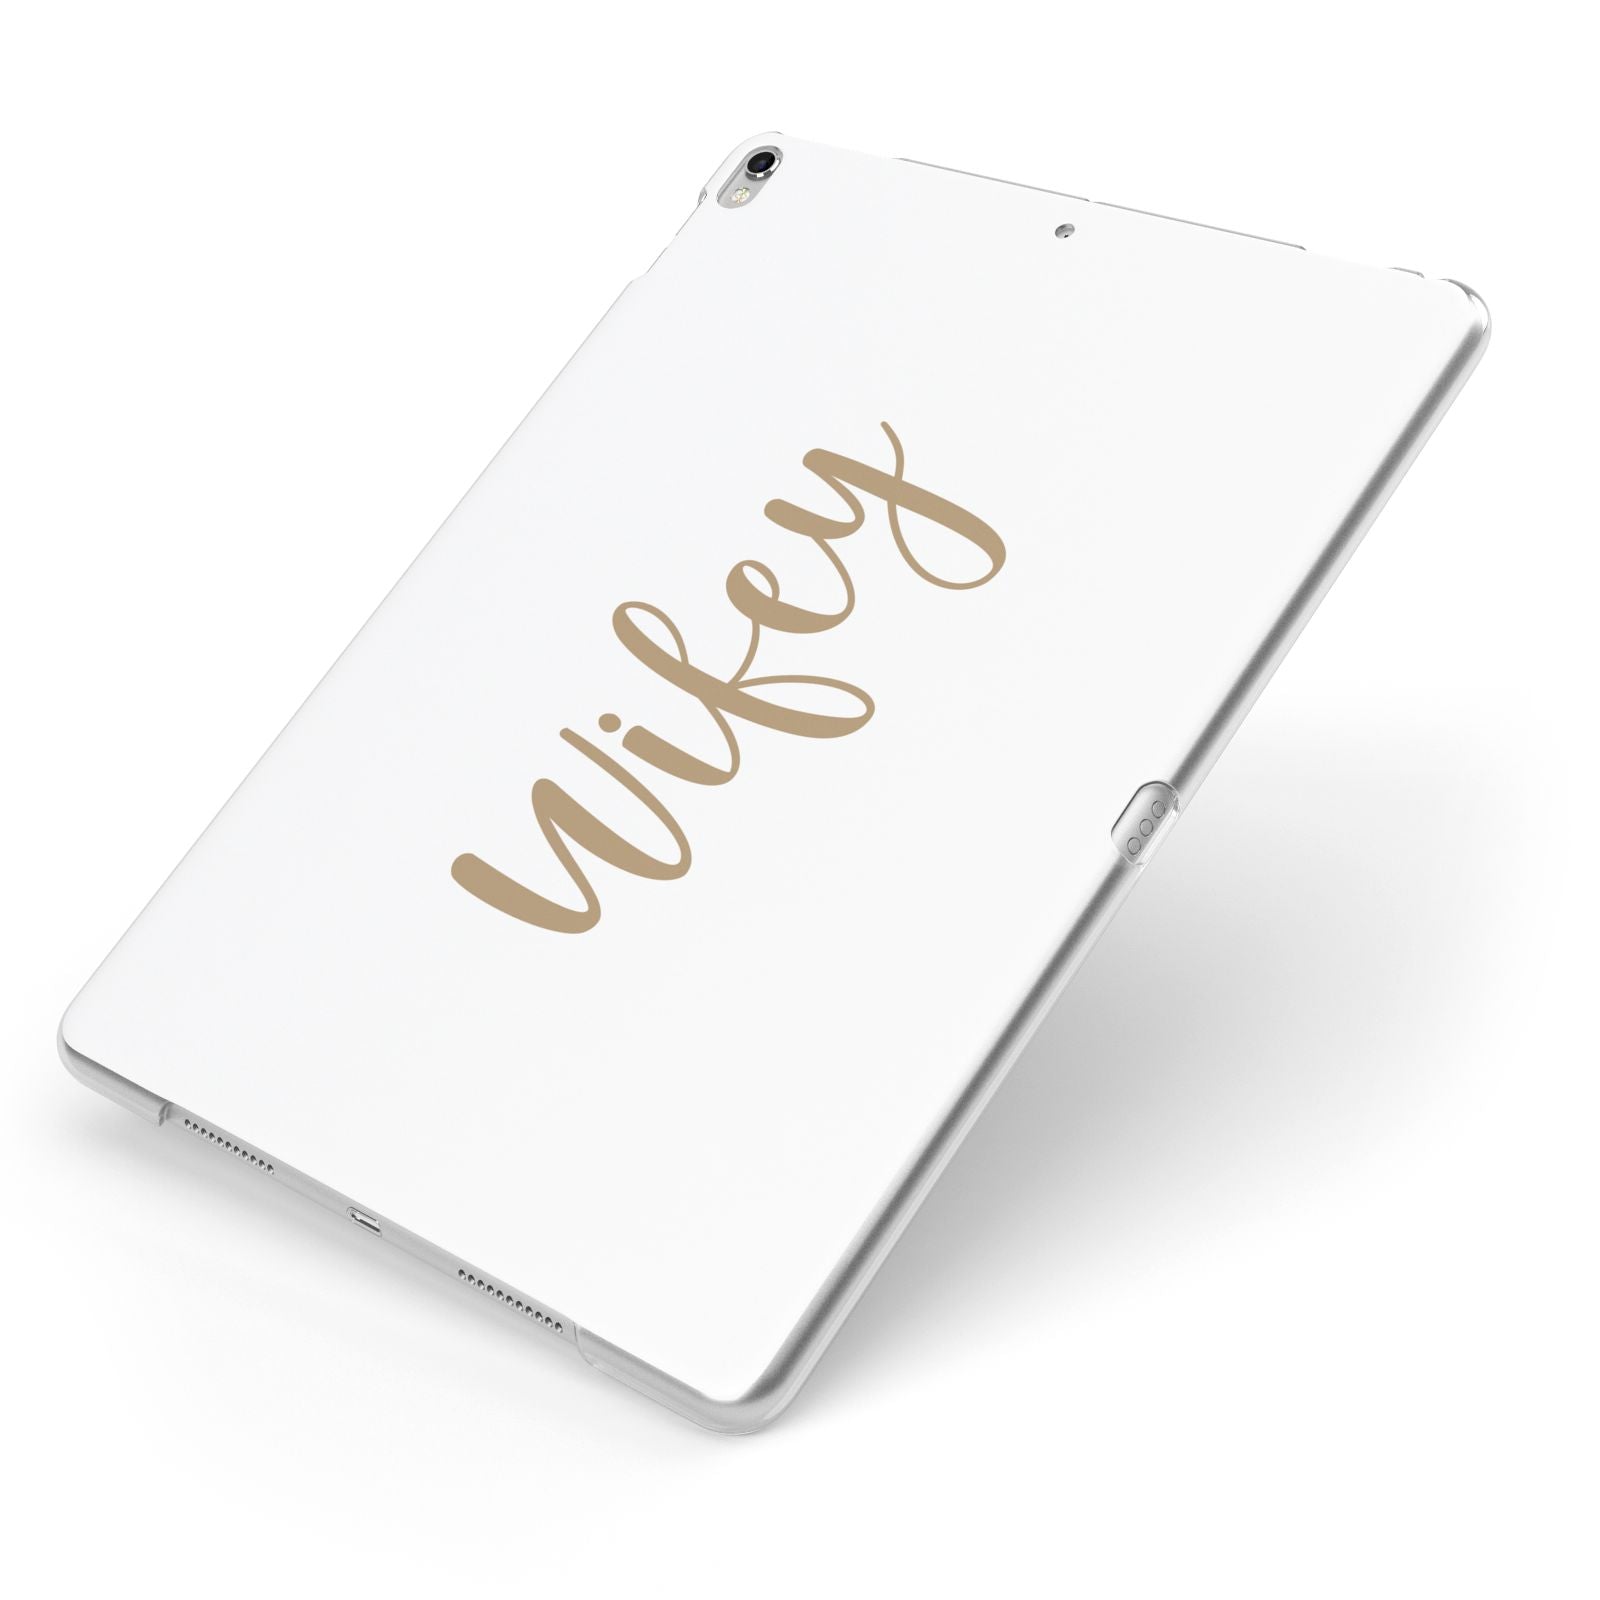 Wifey Apple iPad Case on Silver iPad Side View